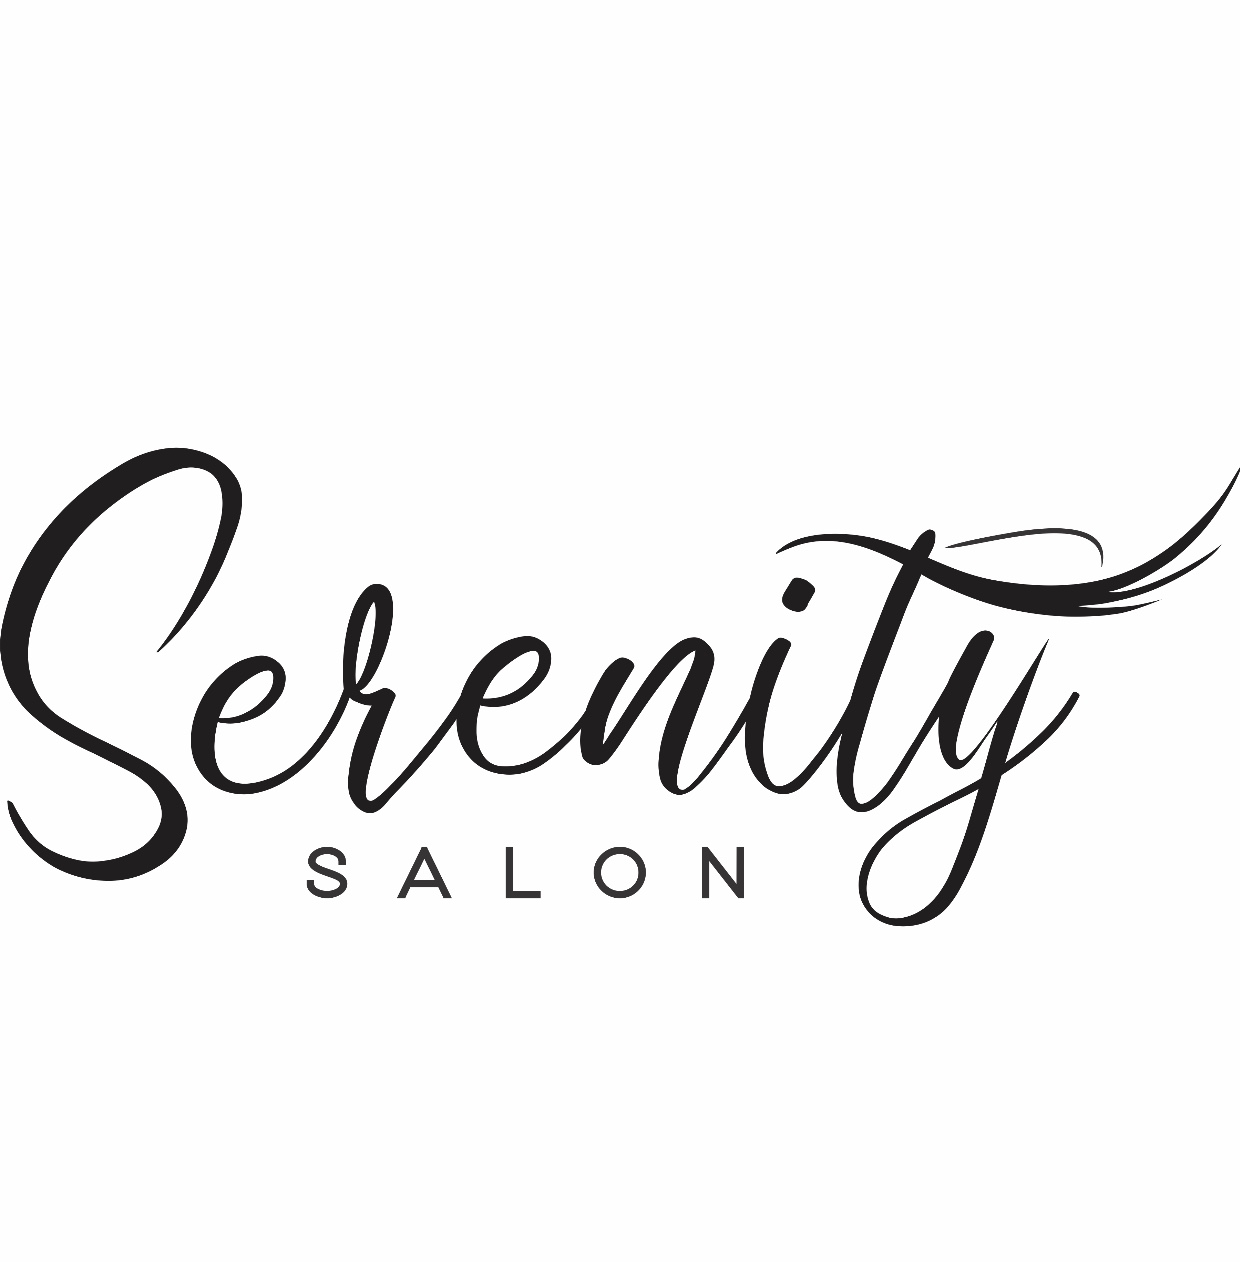 Serenity Salon